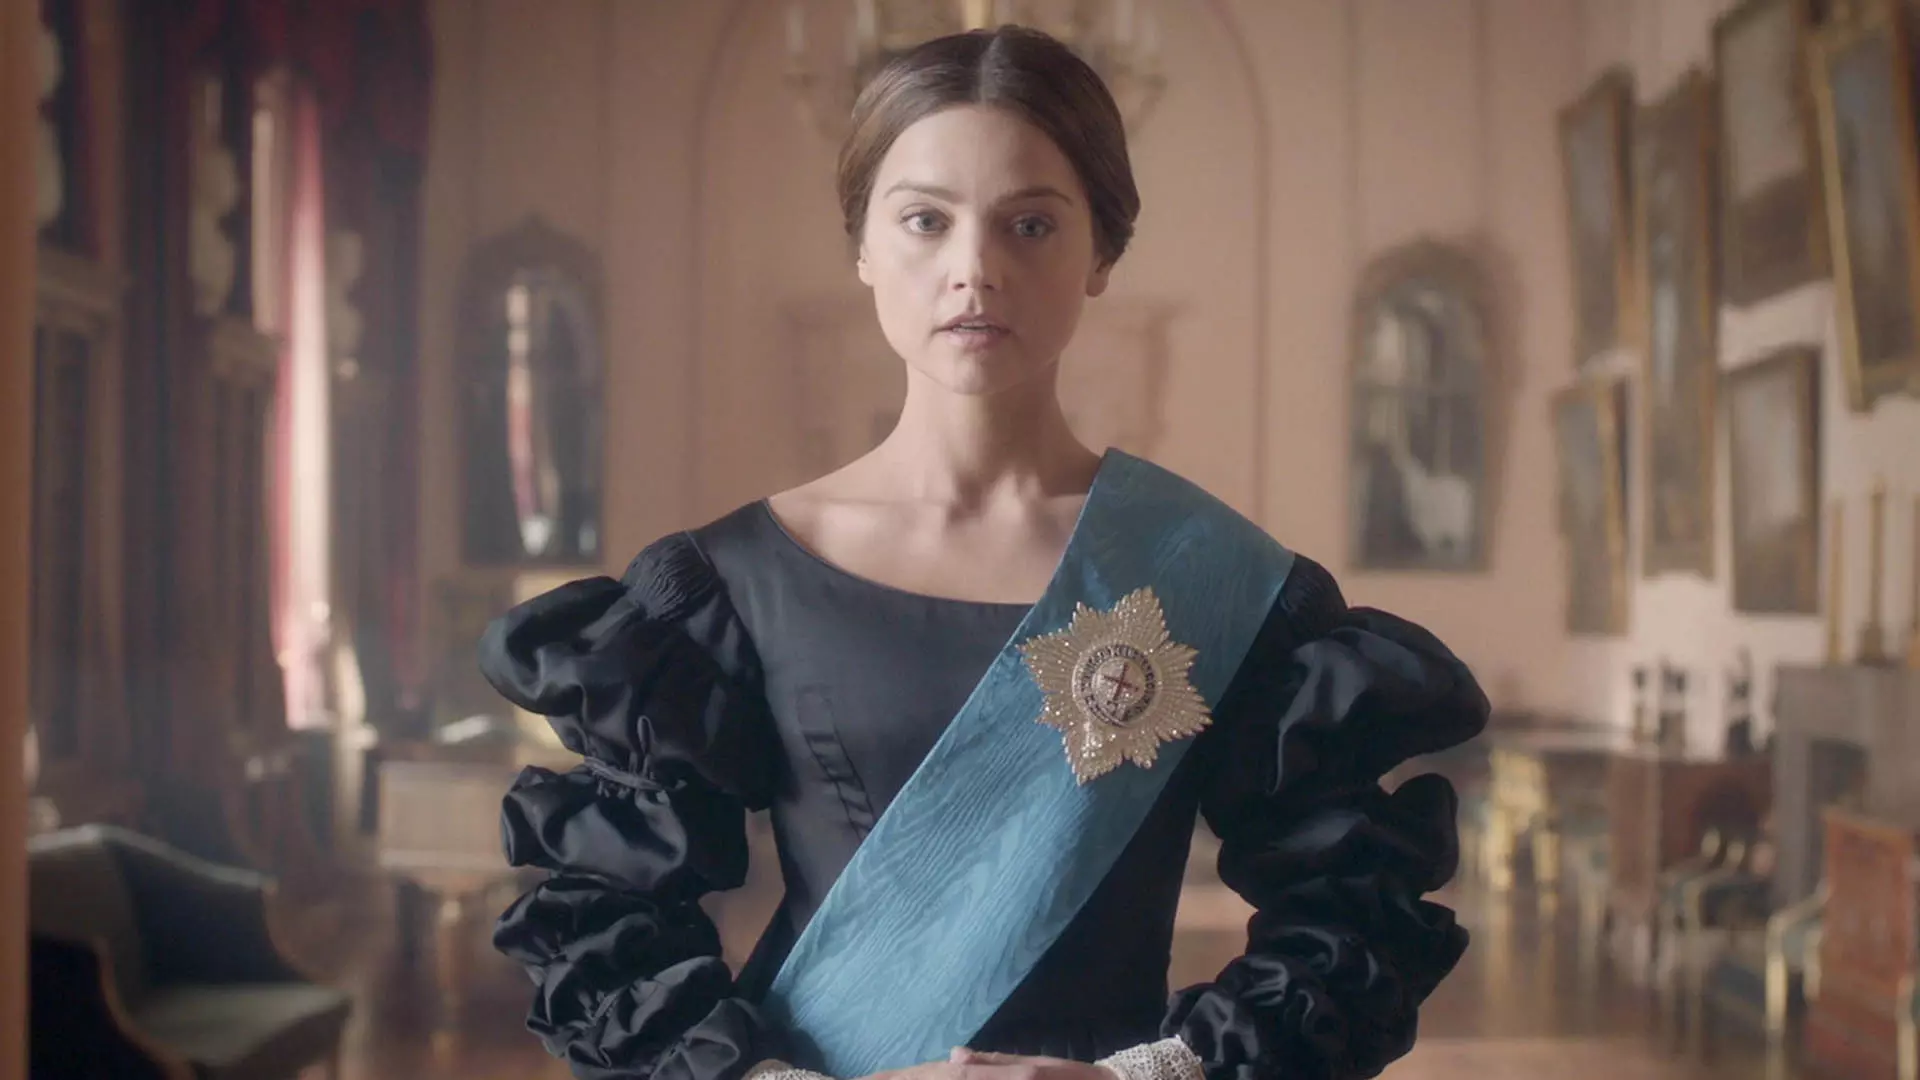 جنا کولمن در نقش ملکه ویکتوریا در سریال Victoria